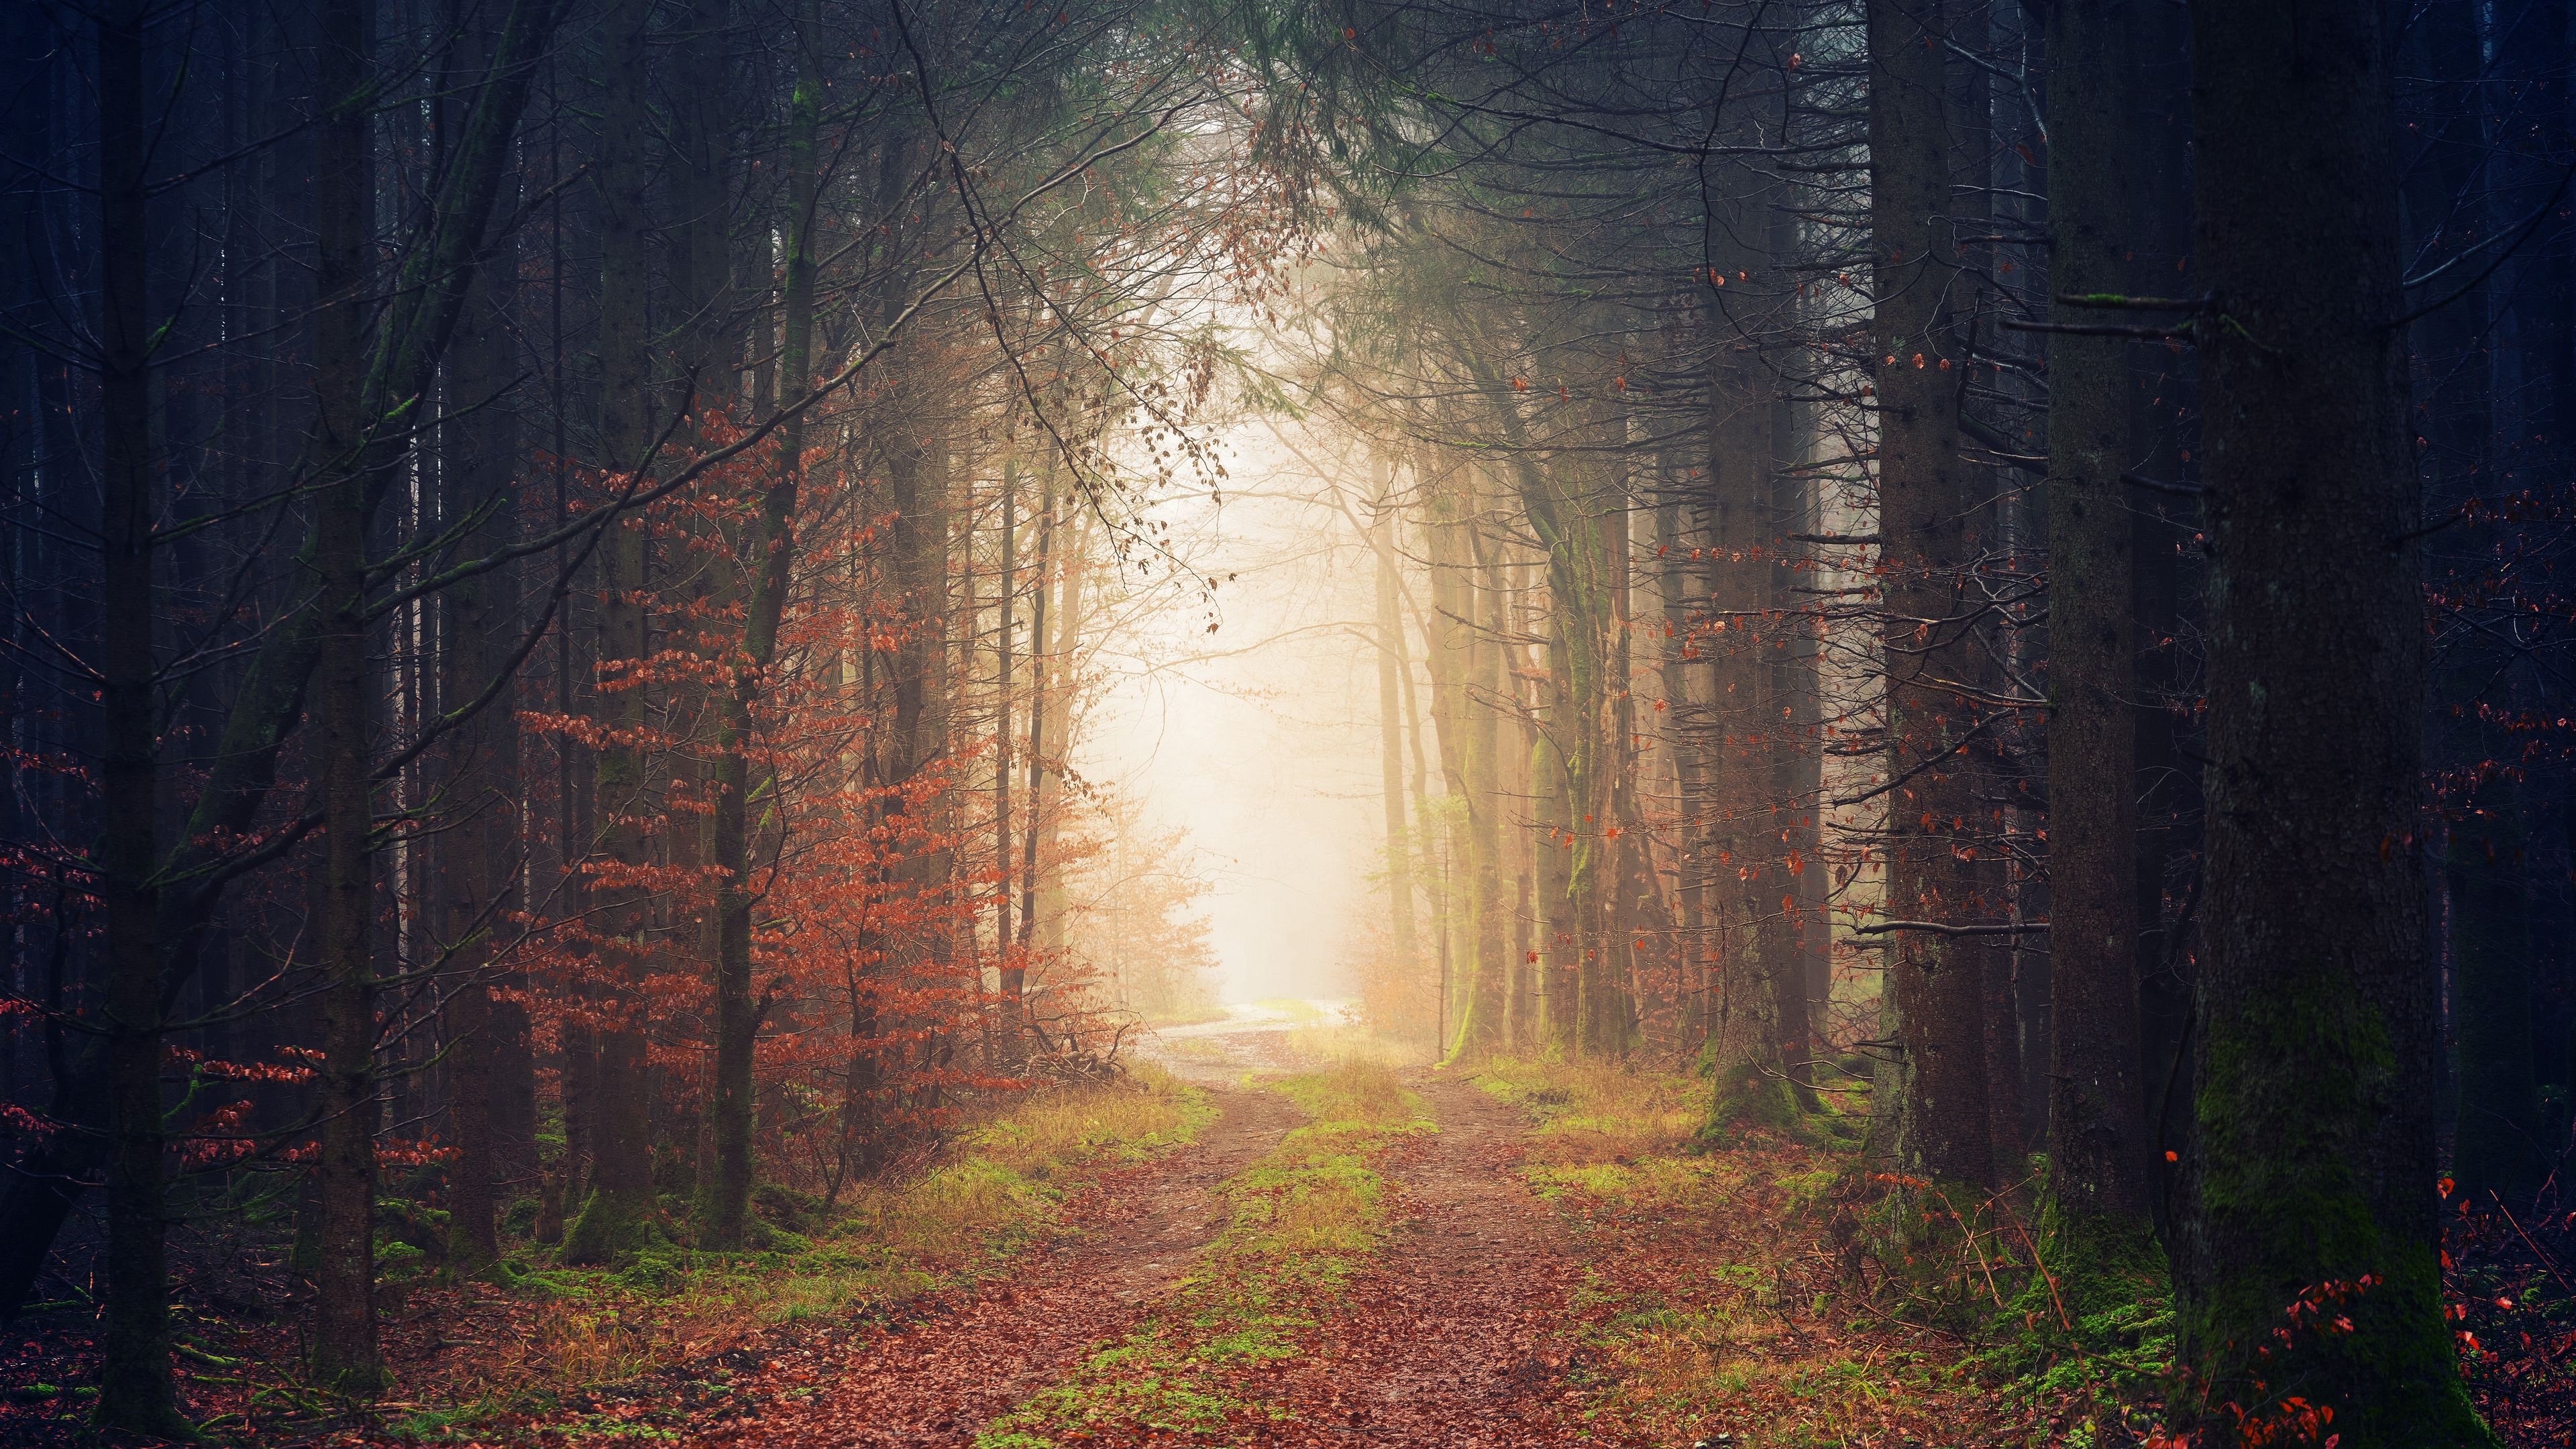 Download wallpaper 3840x2160 autumn, trees, fog, path, foliage 4k